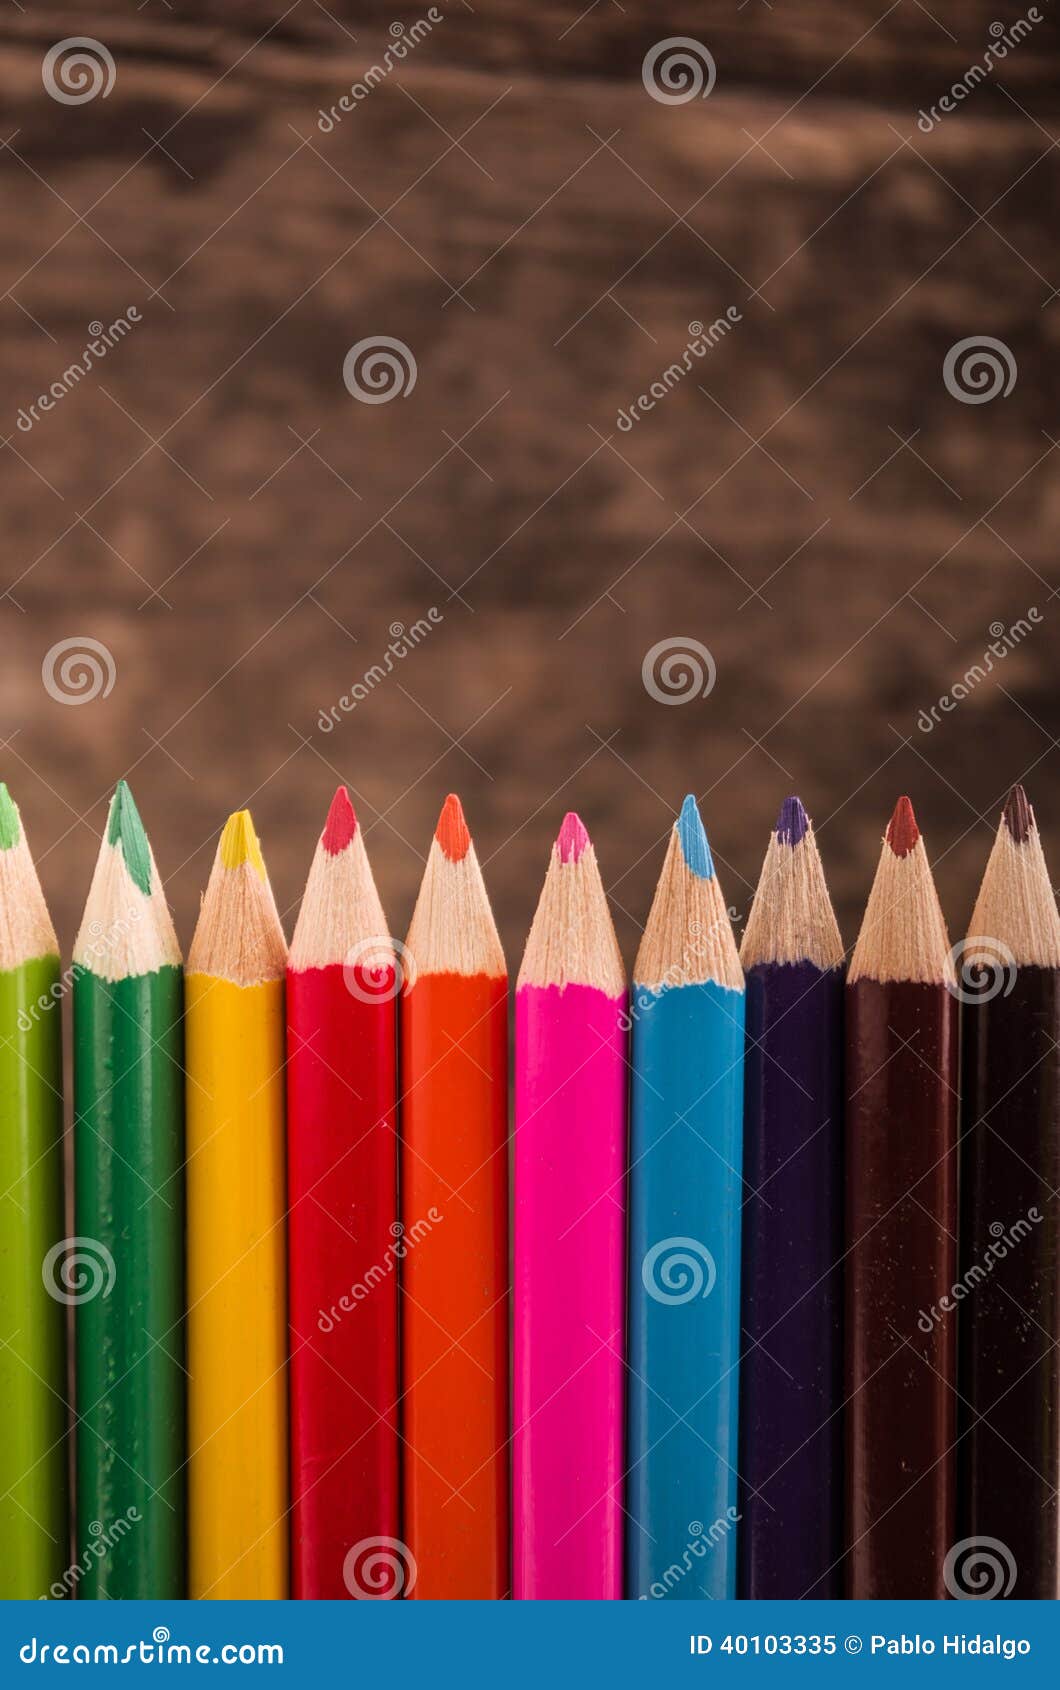 color pencils scattered on wood background